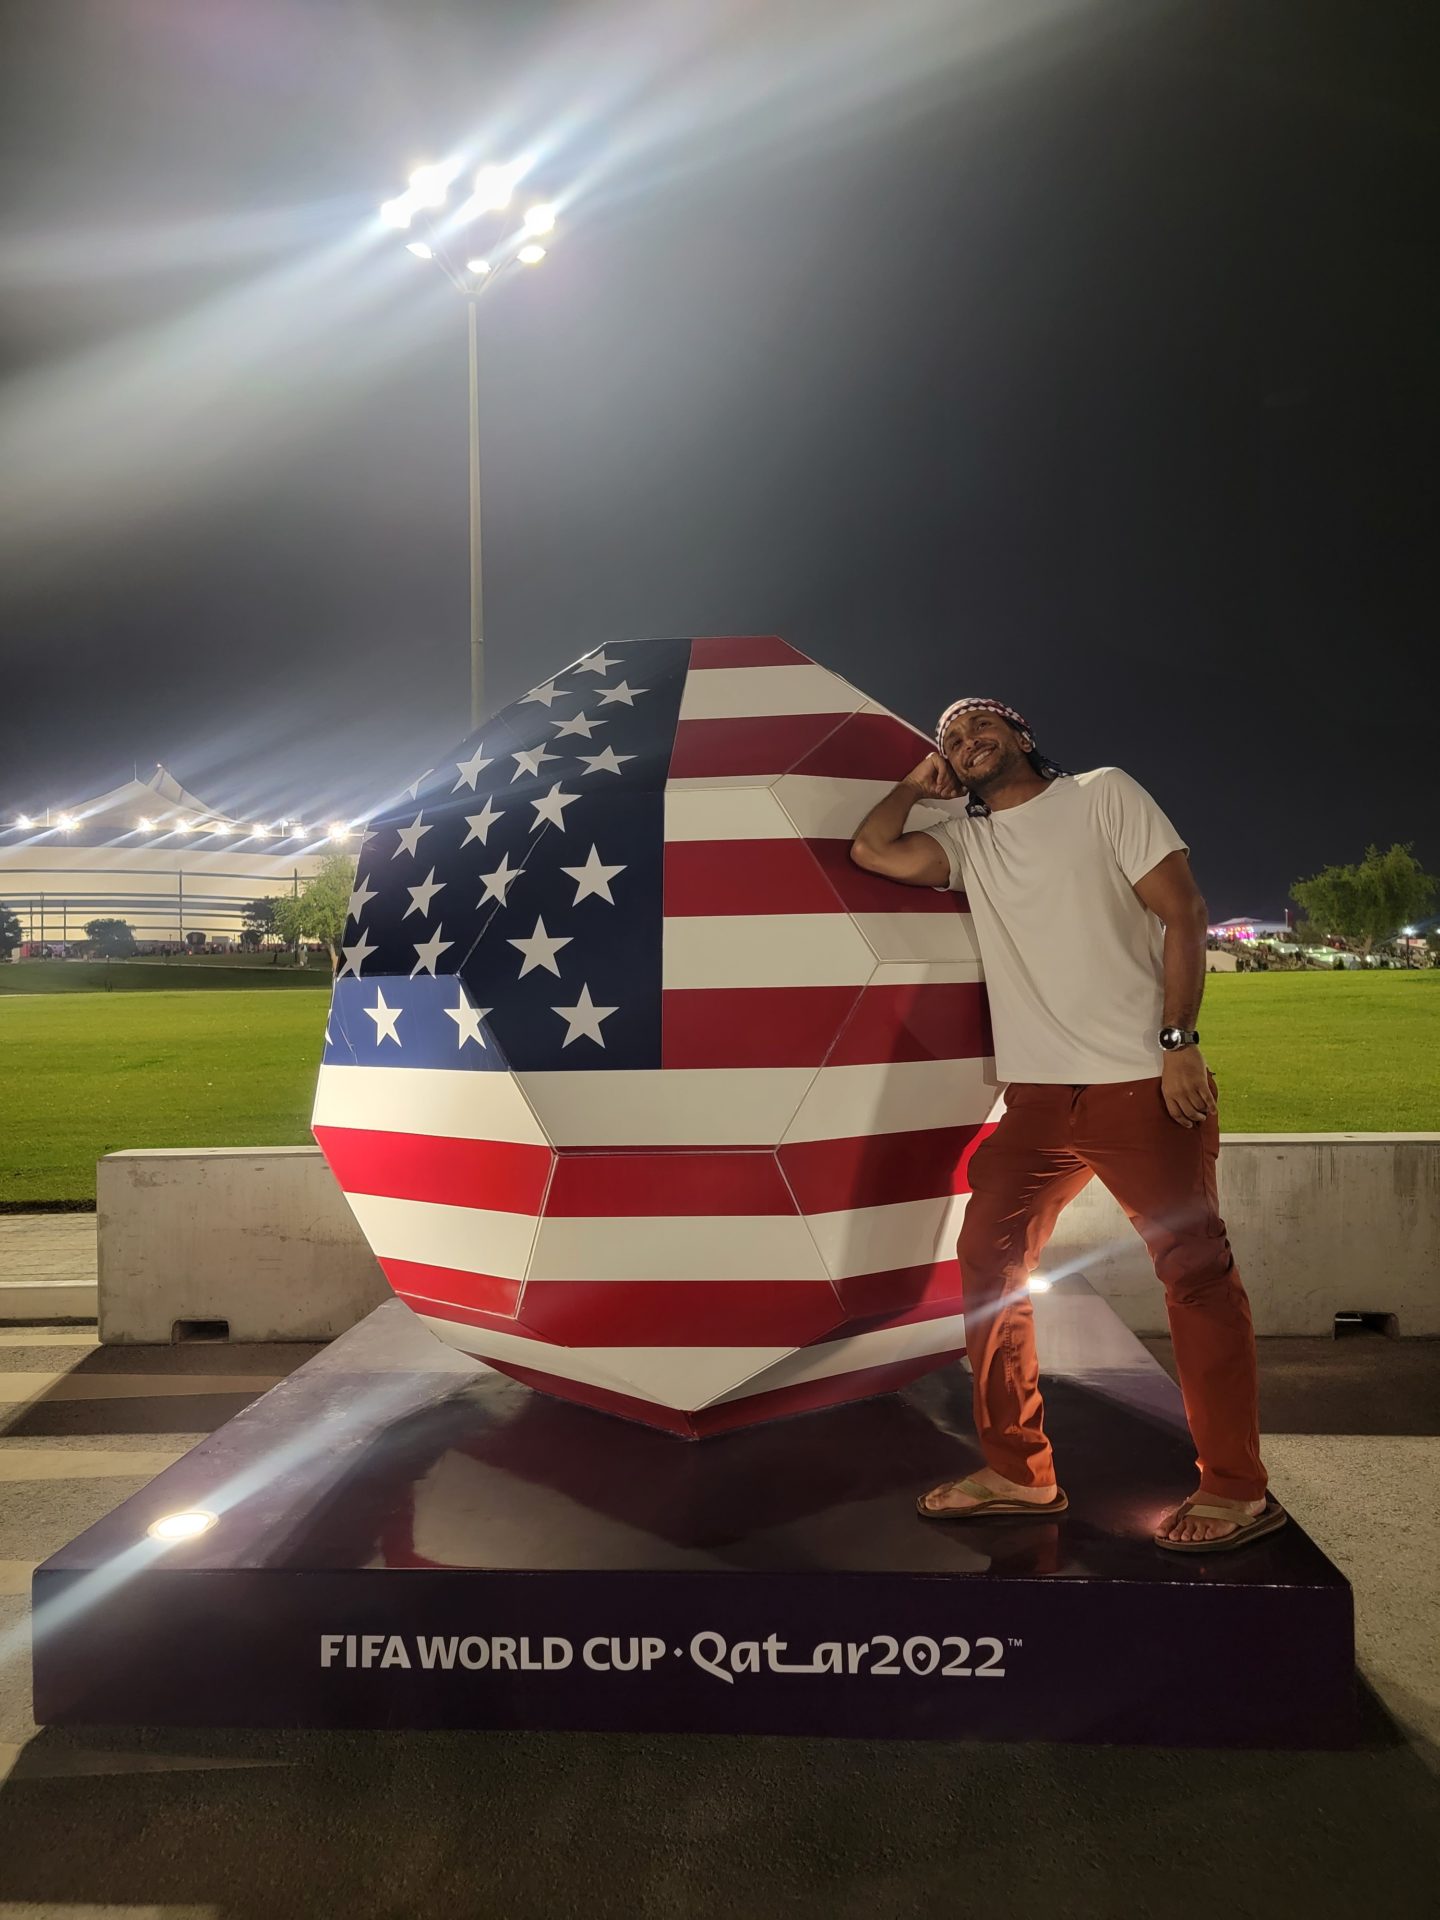 a man standing next to a large football ball